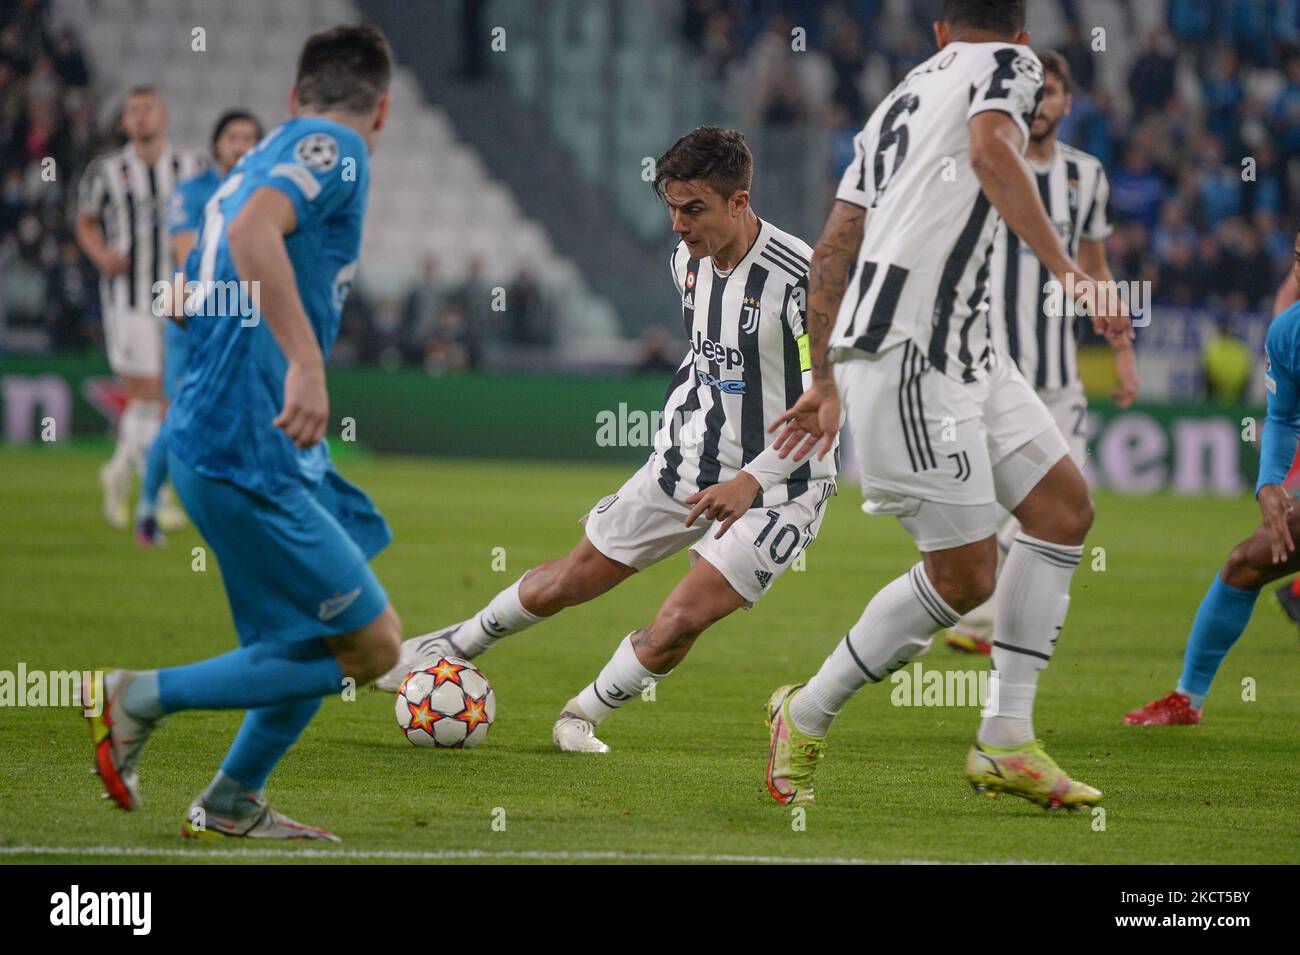 File:FC Zenit Saint Petersburg vs. Juventus, 20 October 2021 43